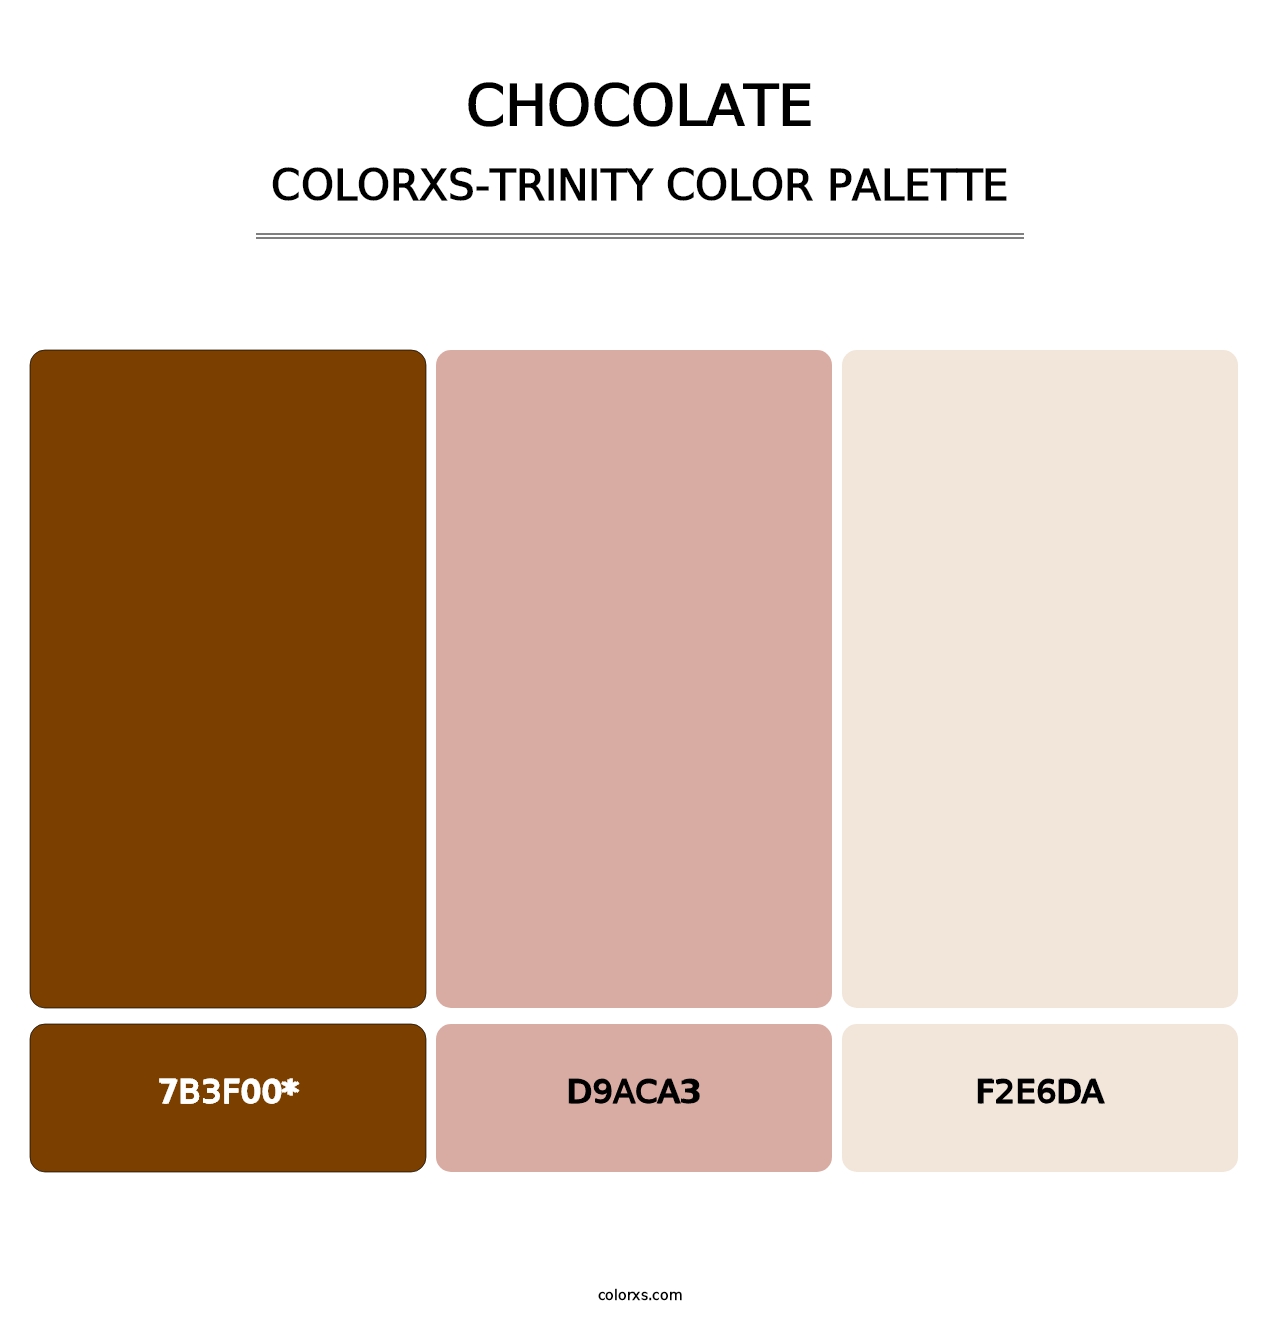 Chocolate - Colorxs Trinity Palette